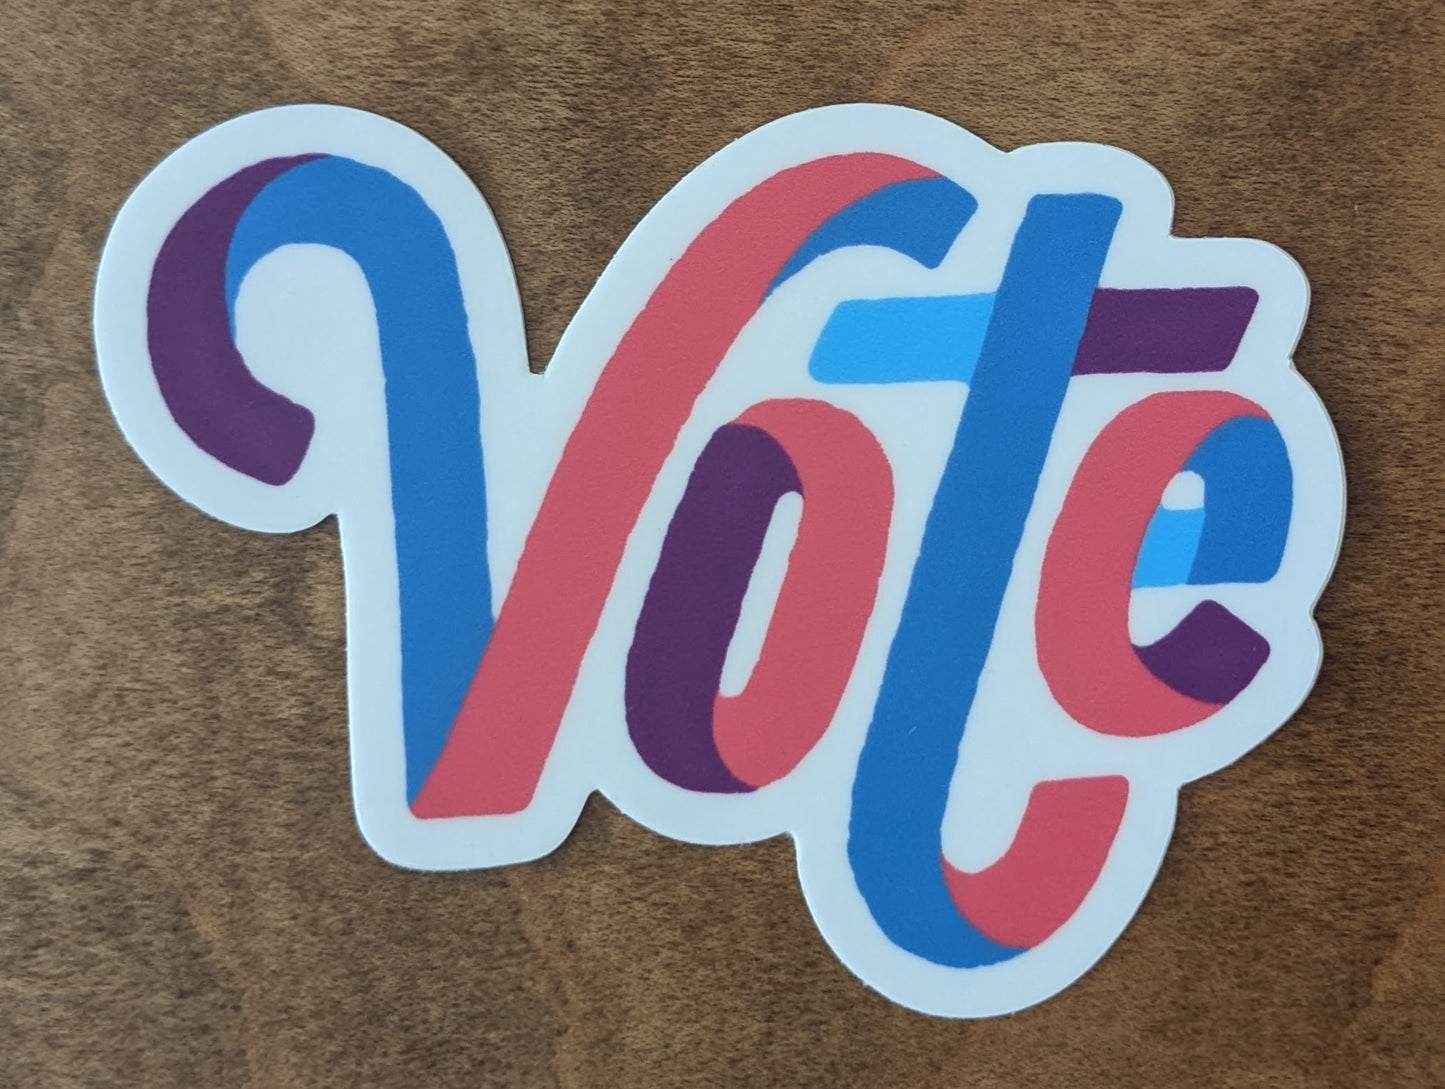 Vote sticker in red, blue and purple